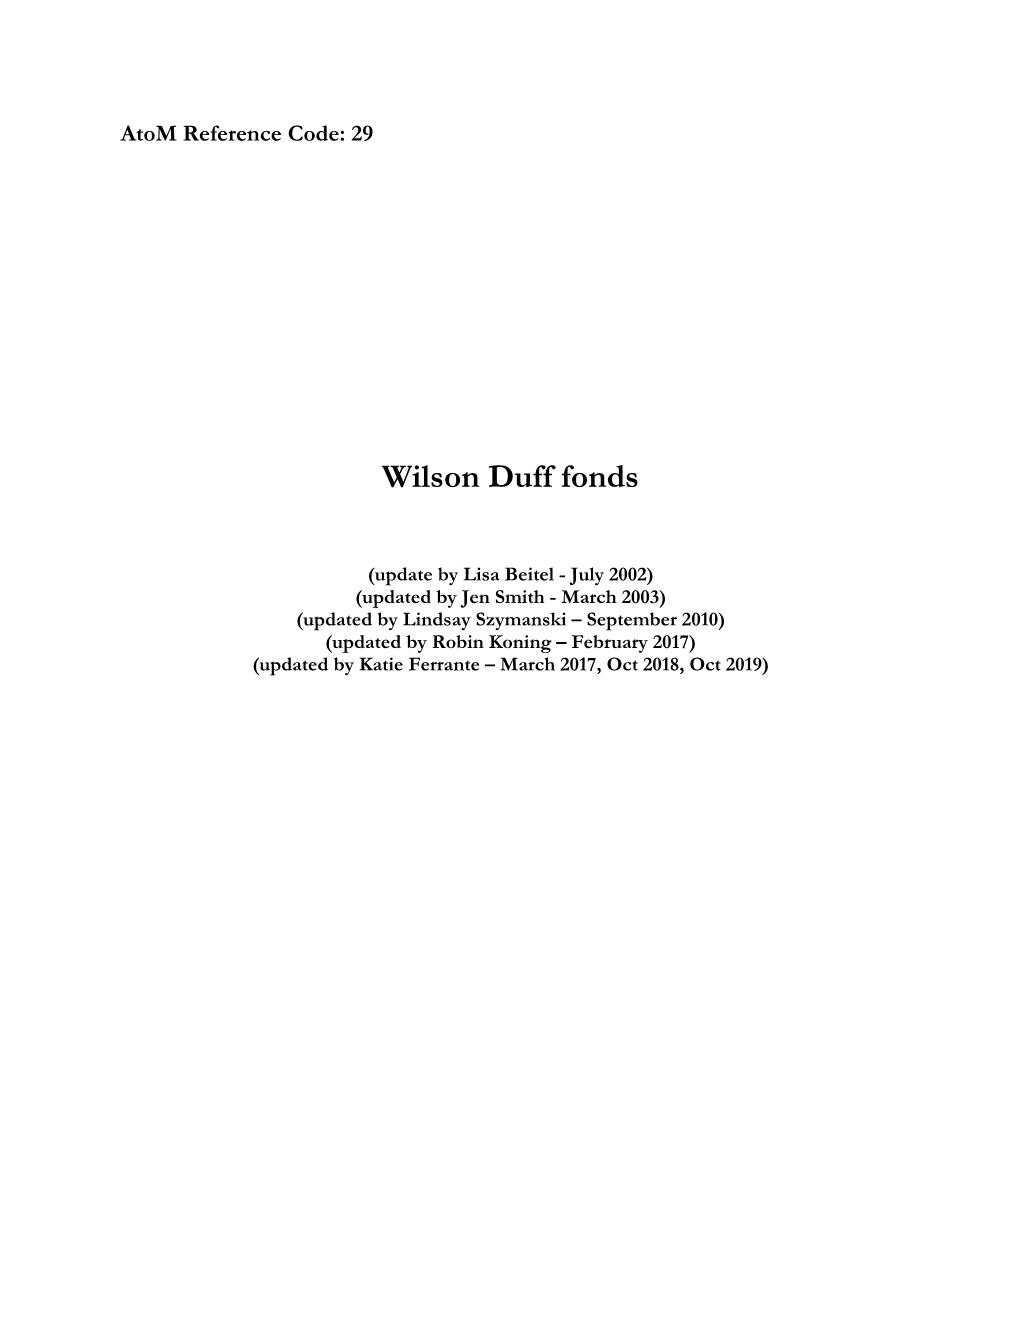 Wilson Duff Fonds